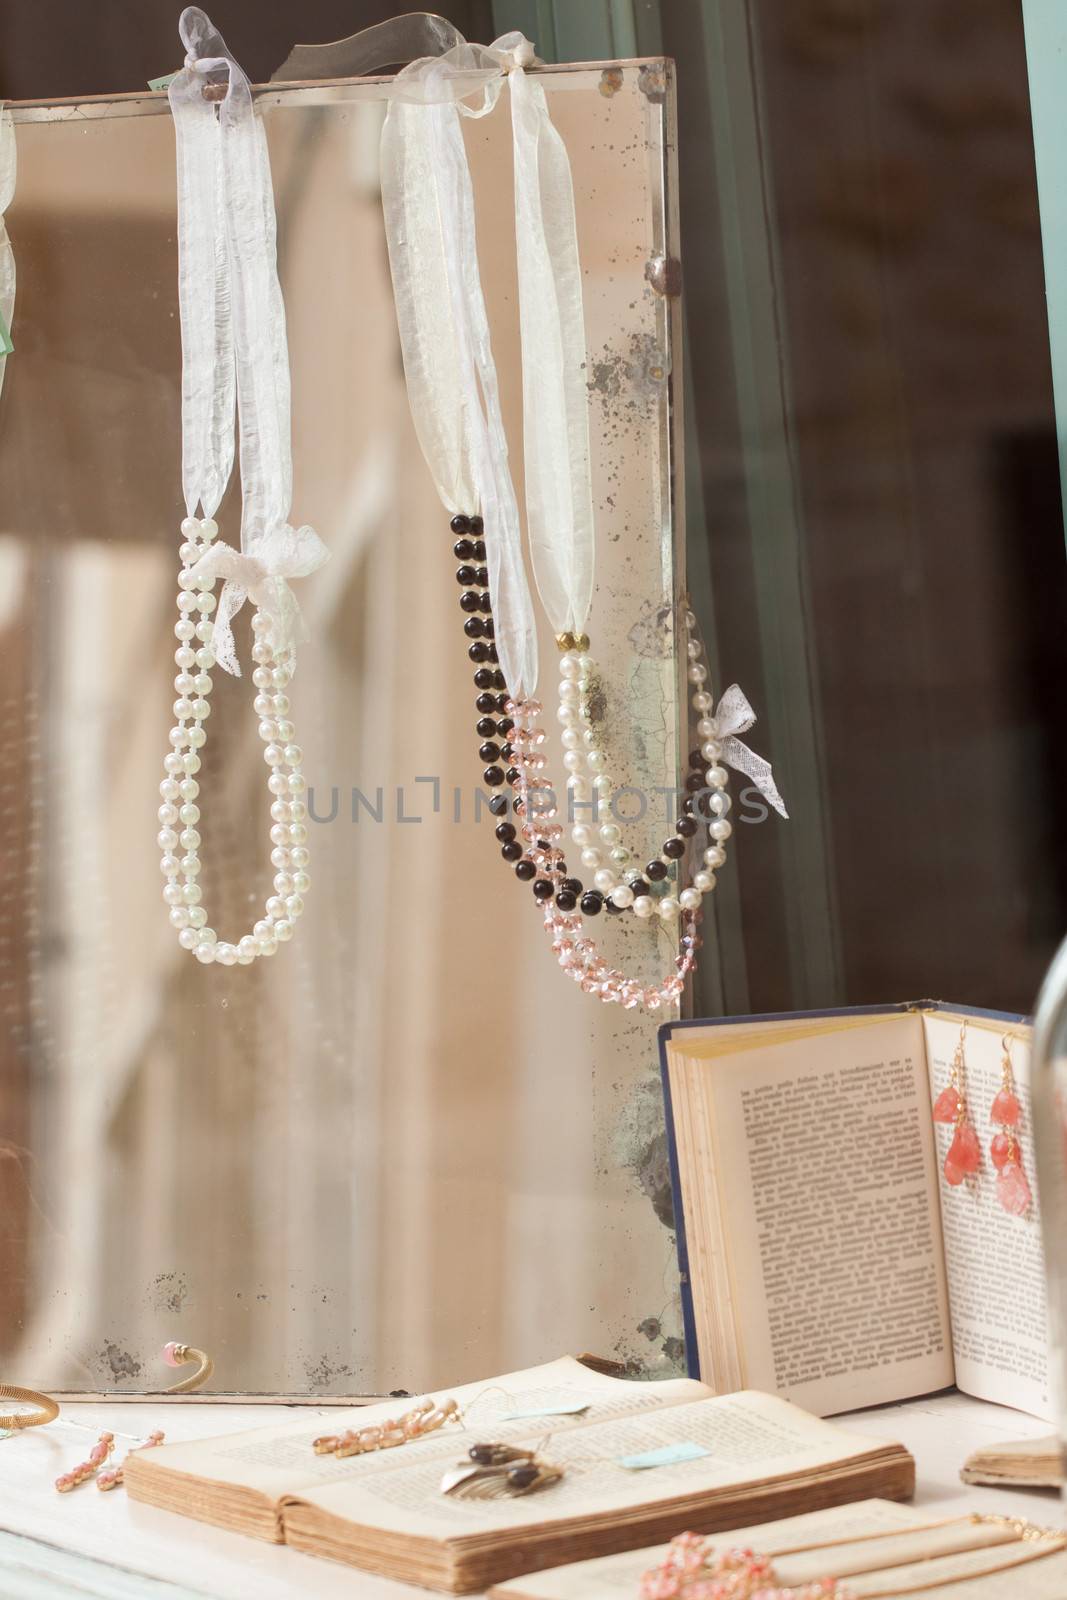 beautiful romantic jewelry accessory decorative in shop window by juniart